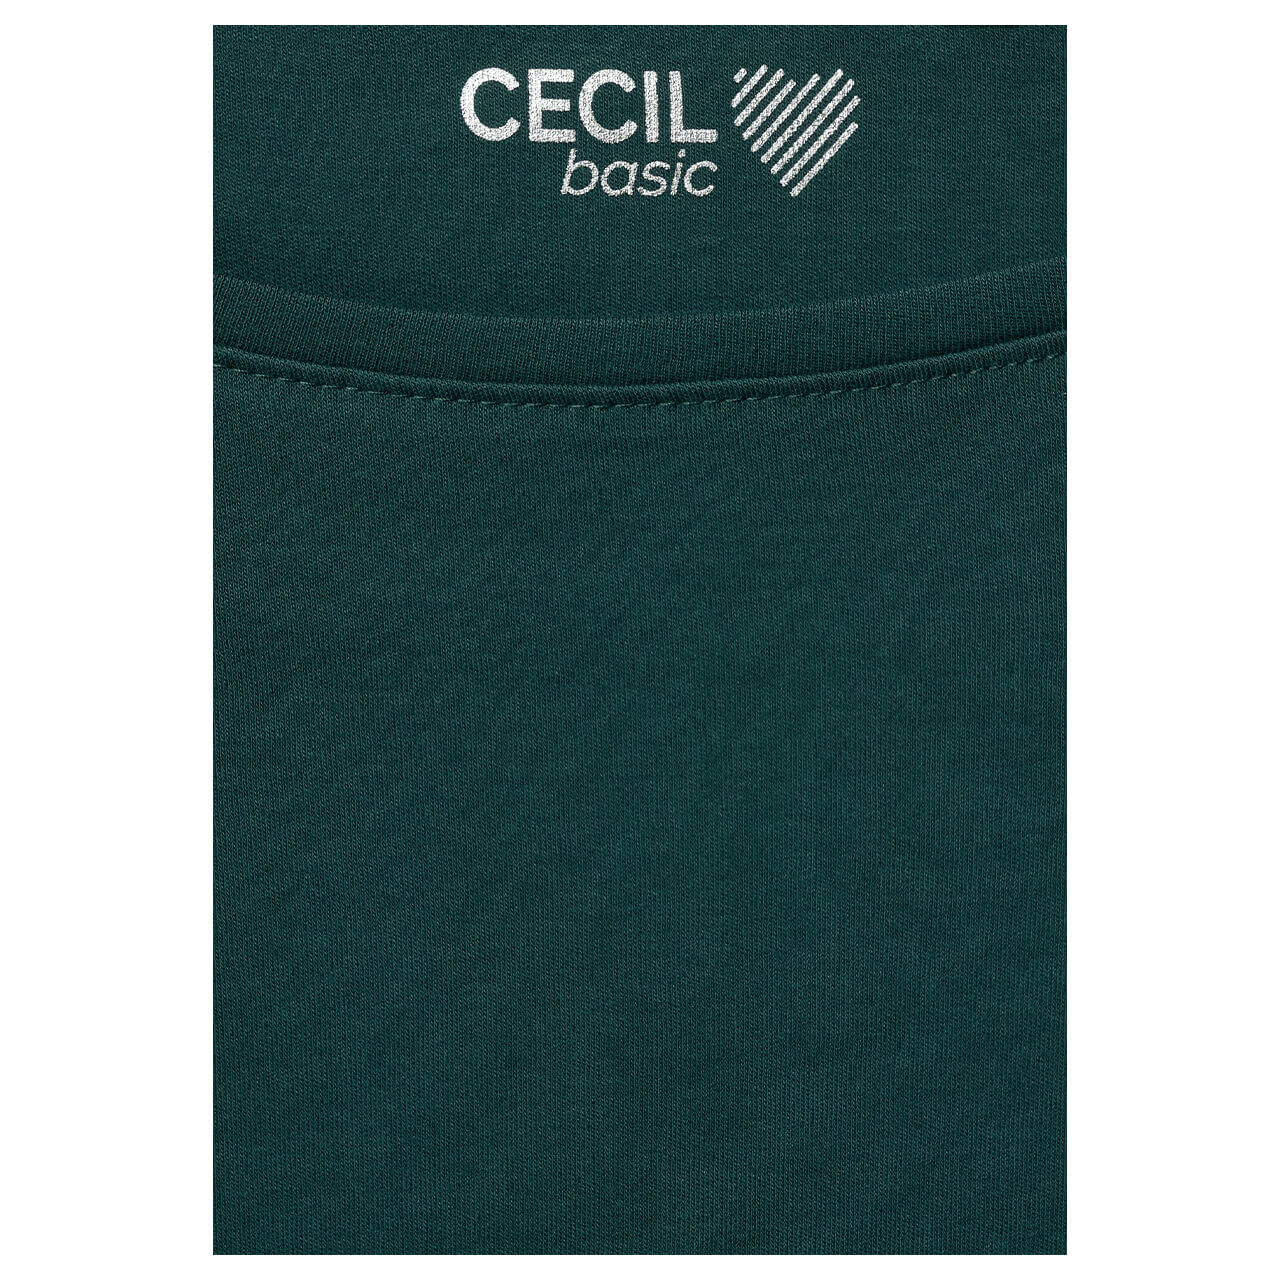 Cecil Basic Boatneck 3/4 Arm Shirt ponderosa pine green